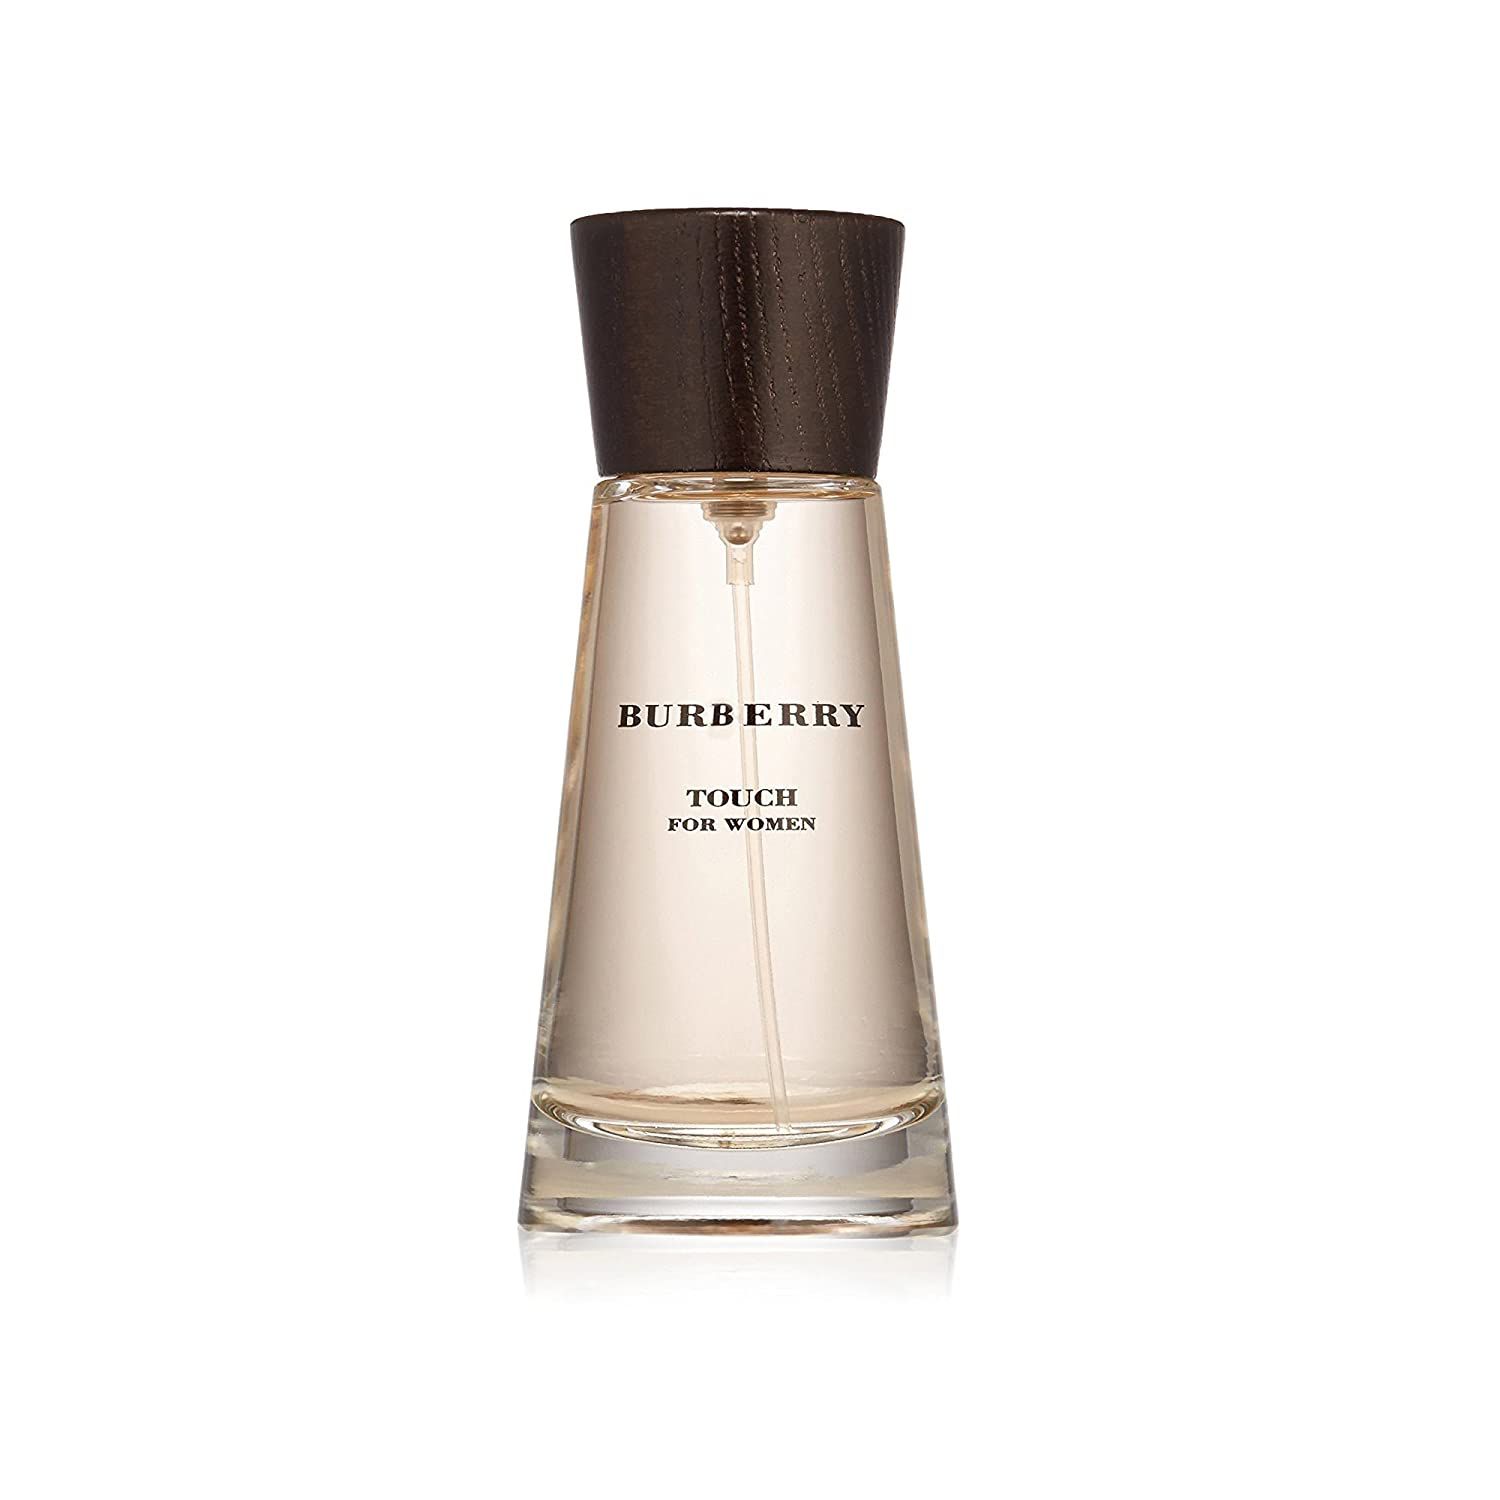 Fingerhut - - Spray Eau Touch 1.7 Parfum De Burberry